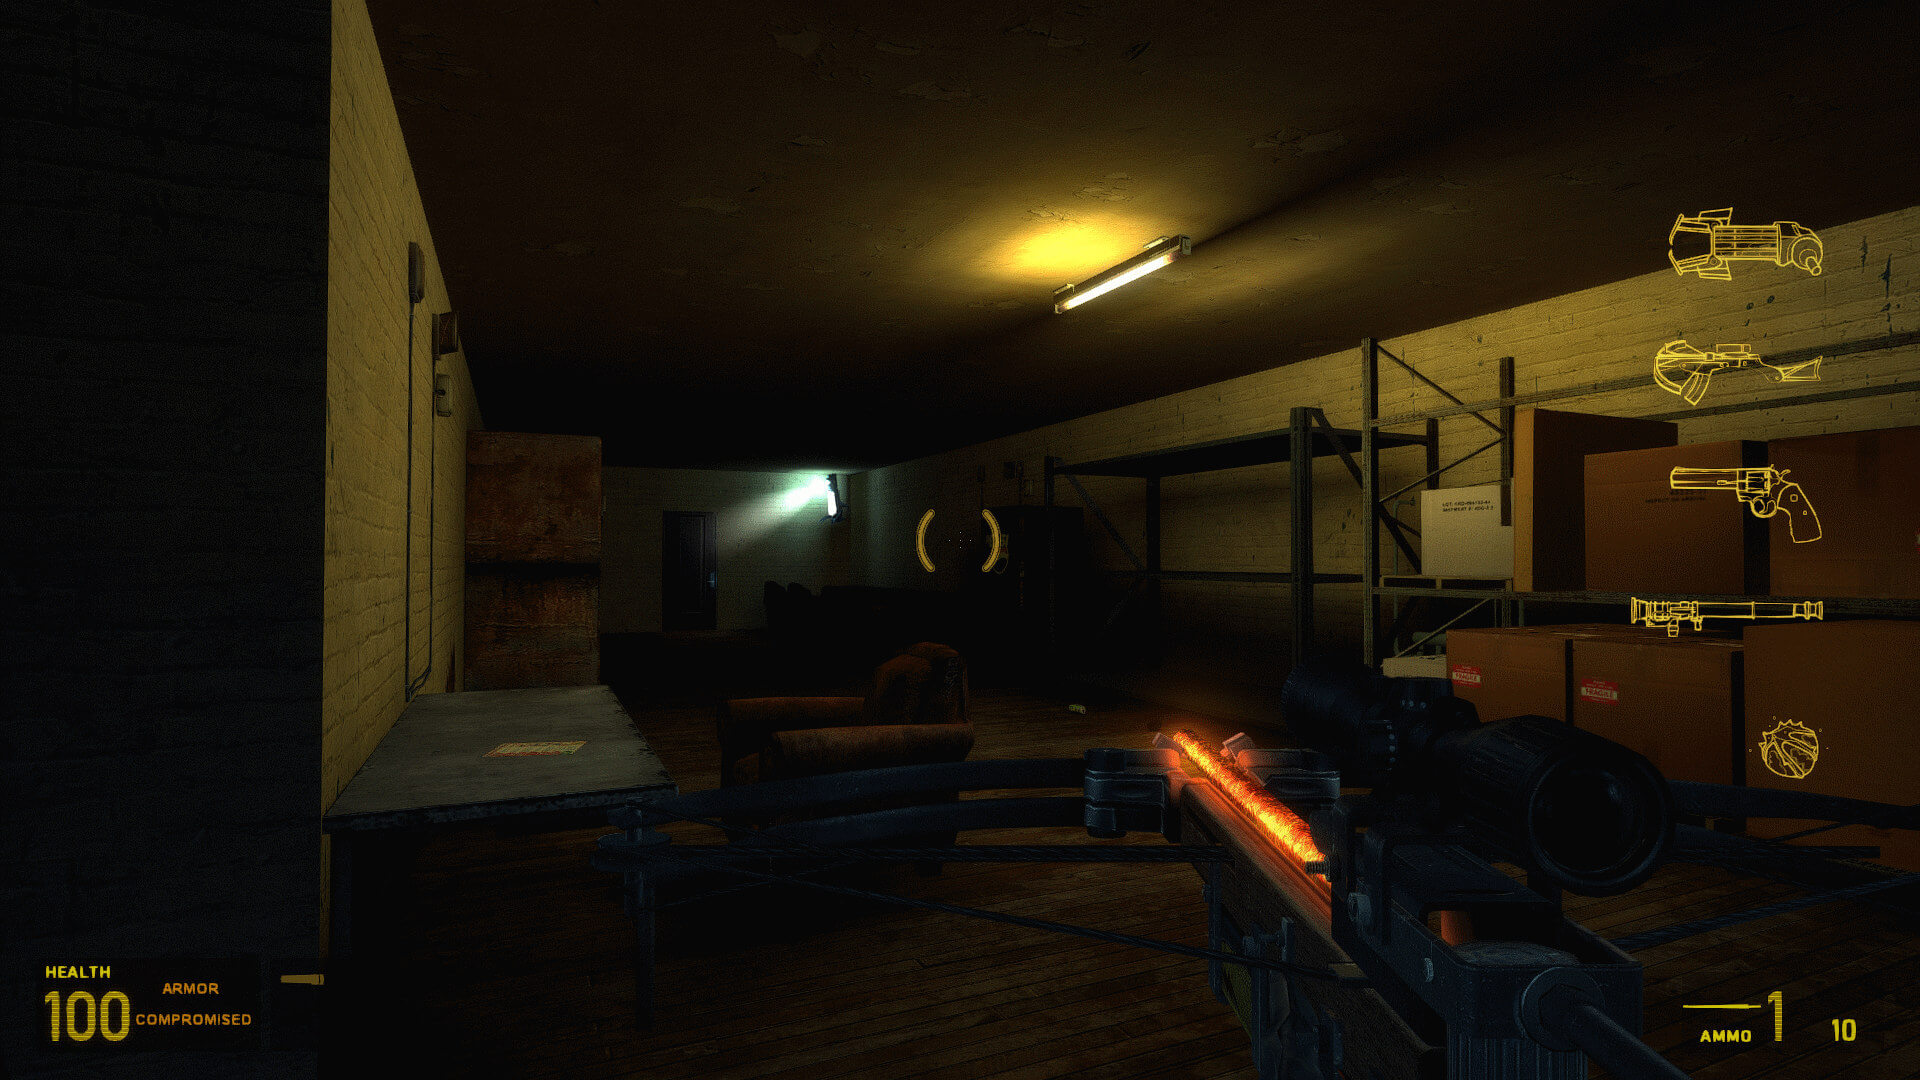 Half-Life 2, Episode 3 The Closure v. 2.0 news - Mod DB